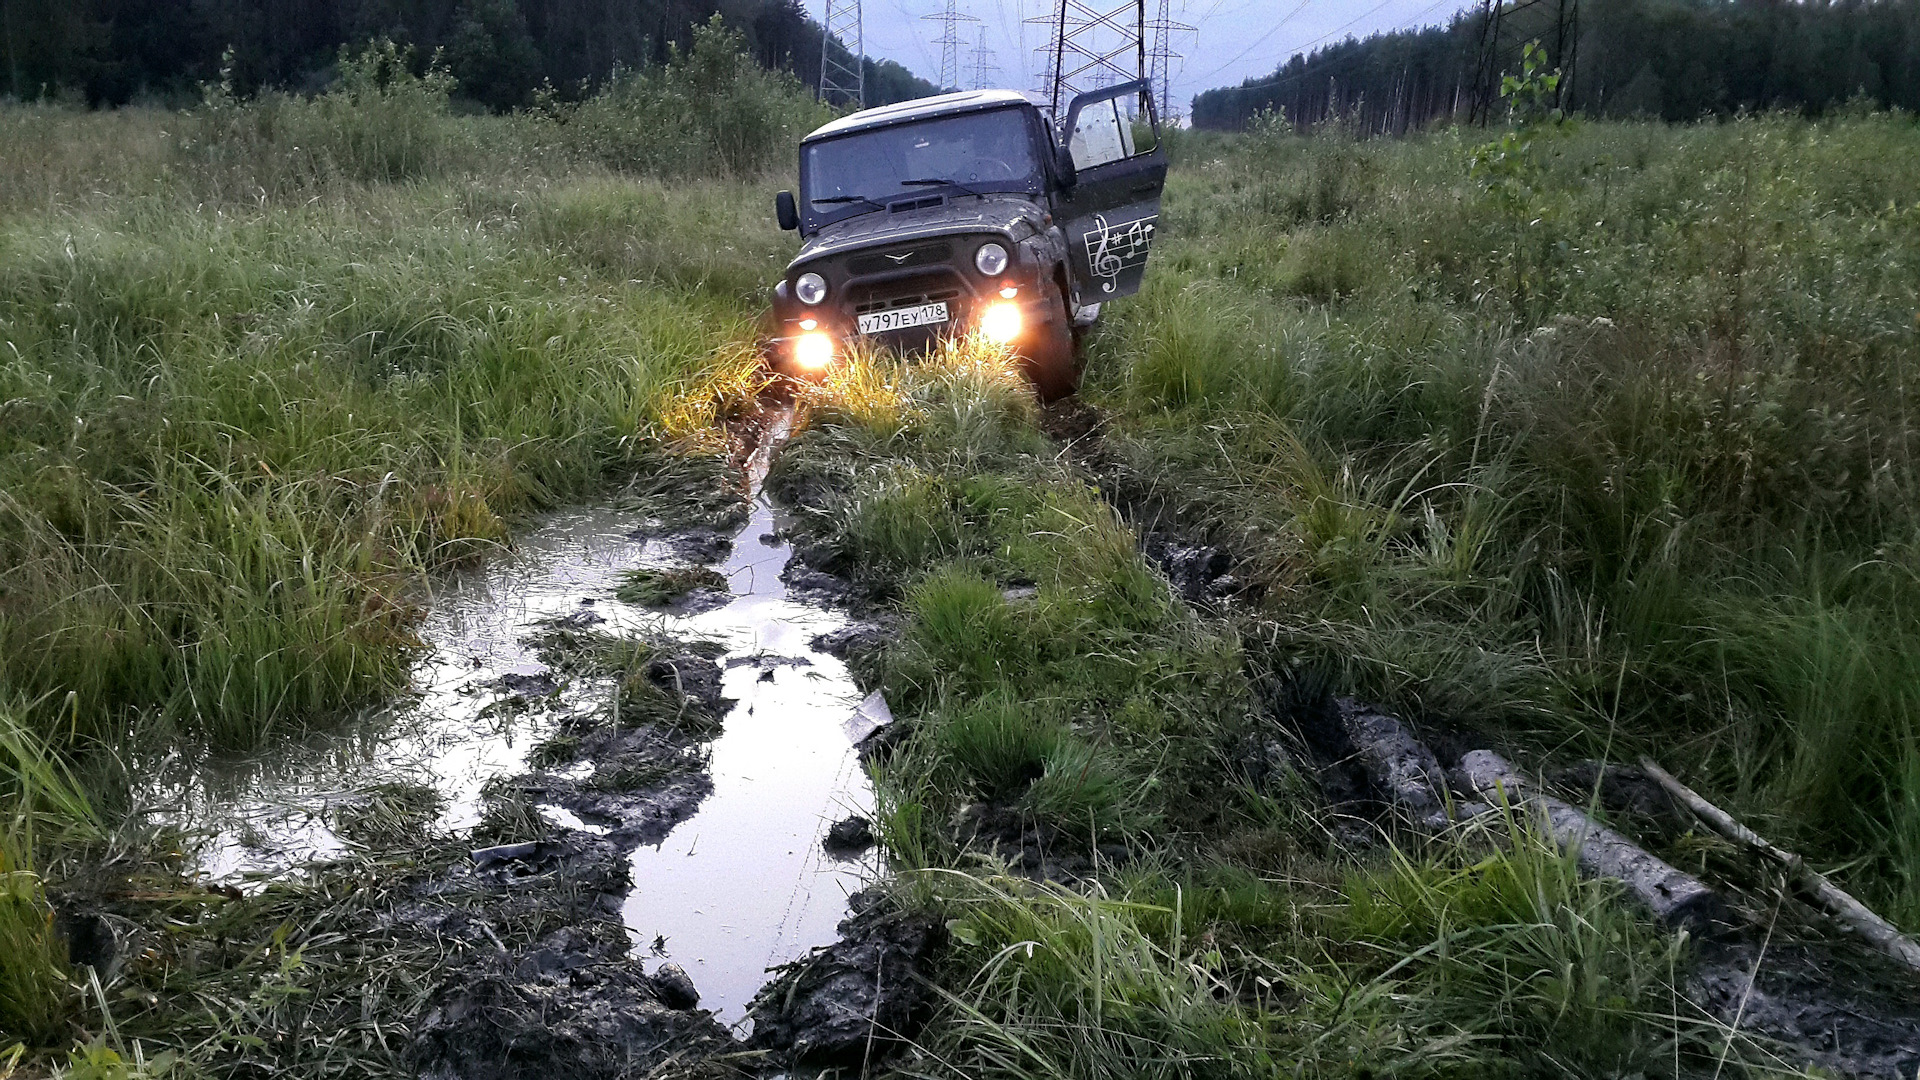 Транспорт болот. УАЗ 469 В болоте. УАЗ Хантер в болоте. УАЗ 469 В грязи. УАЗ Патриот в болоте.